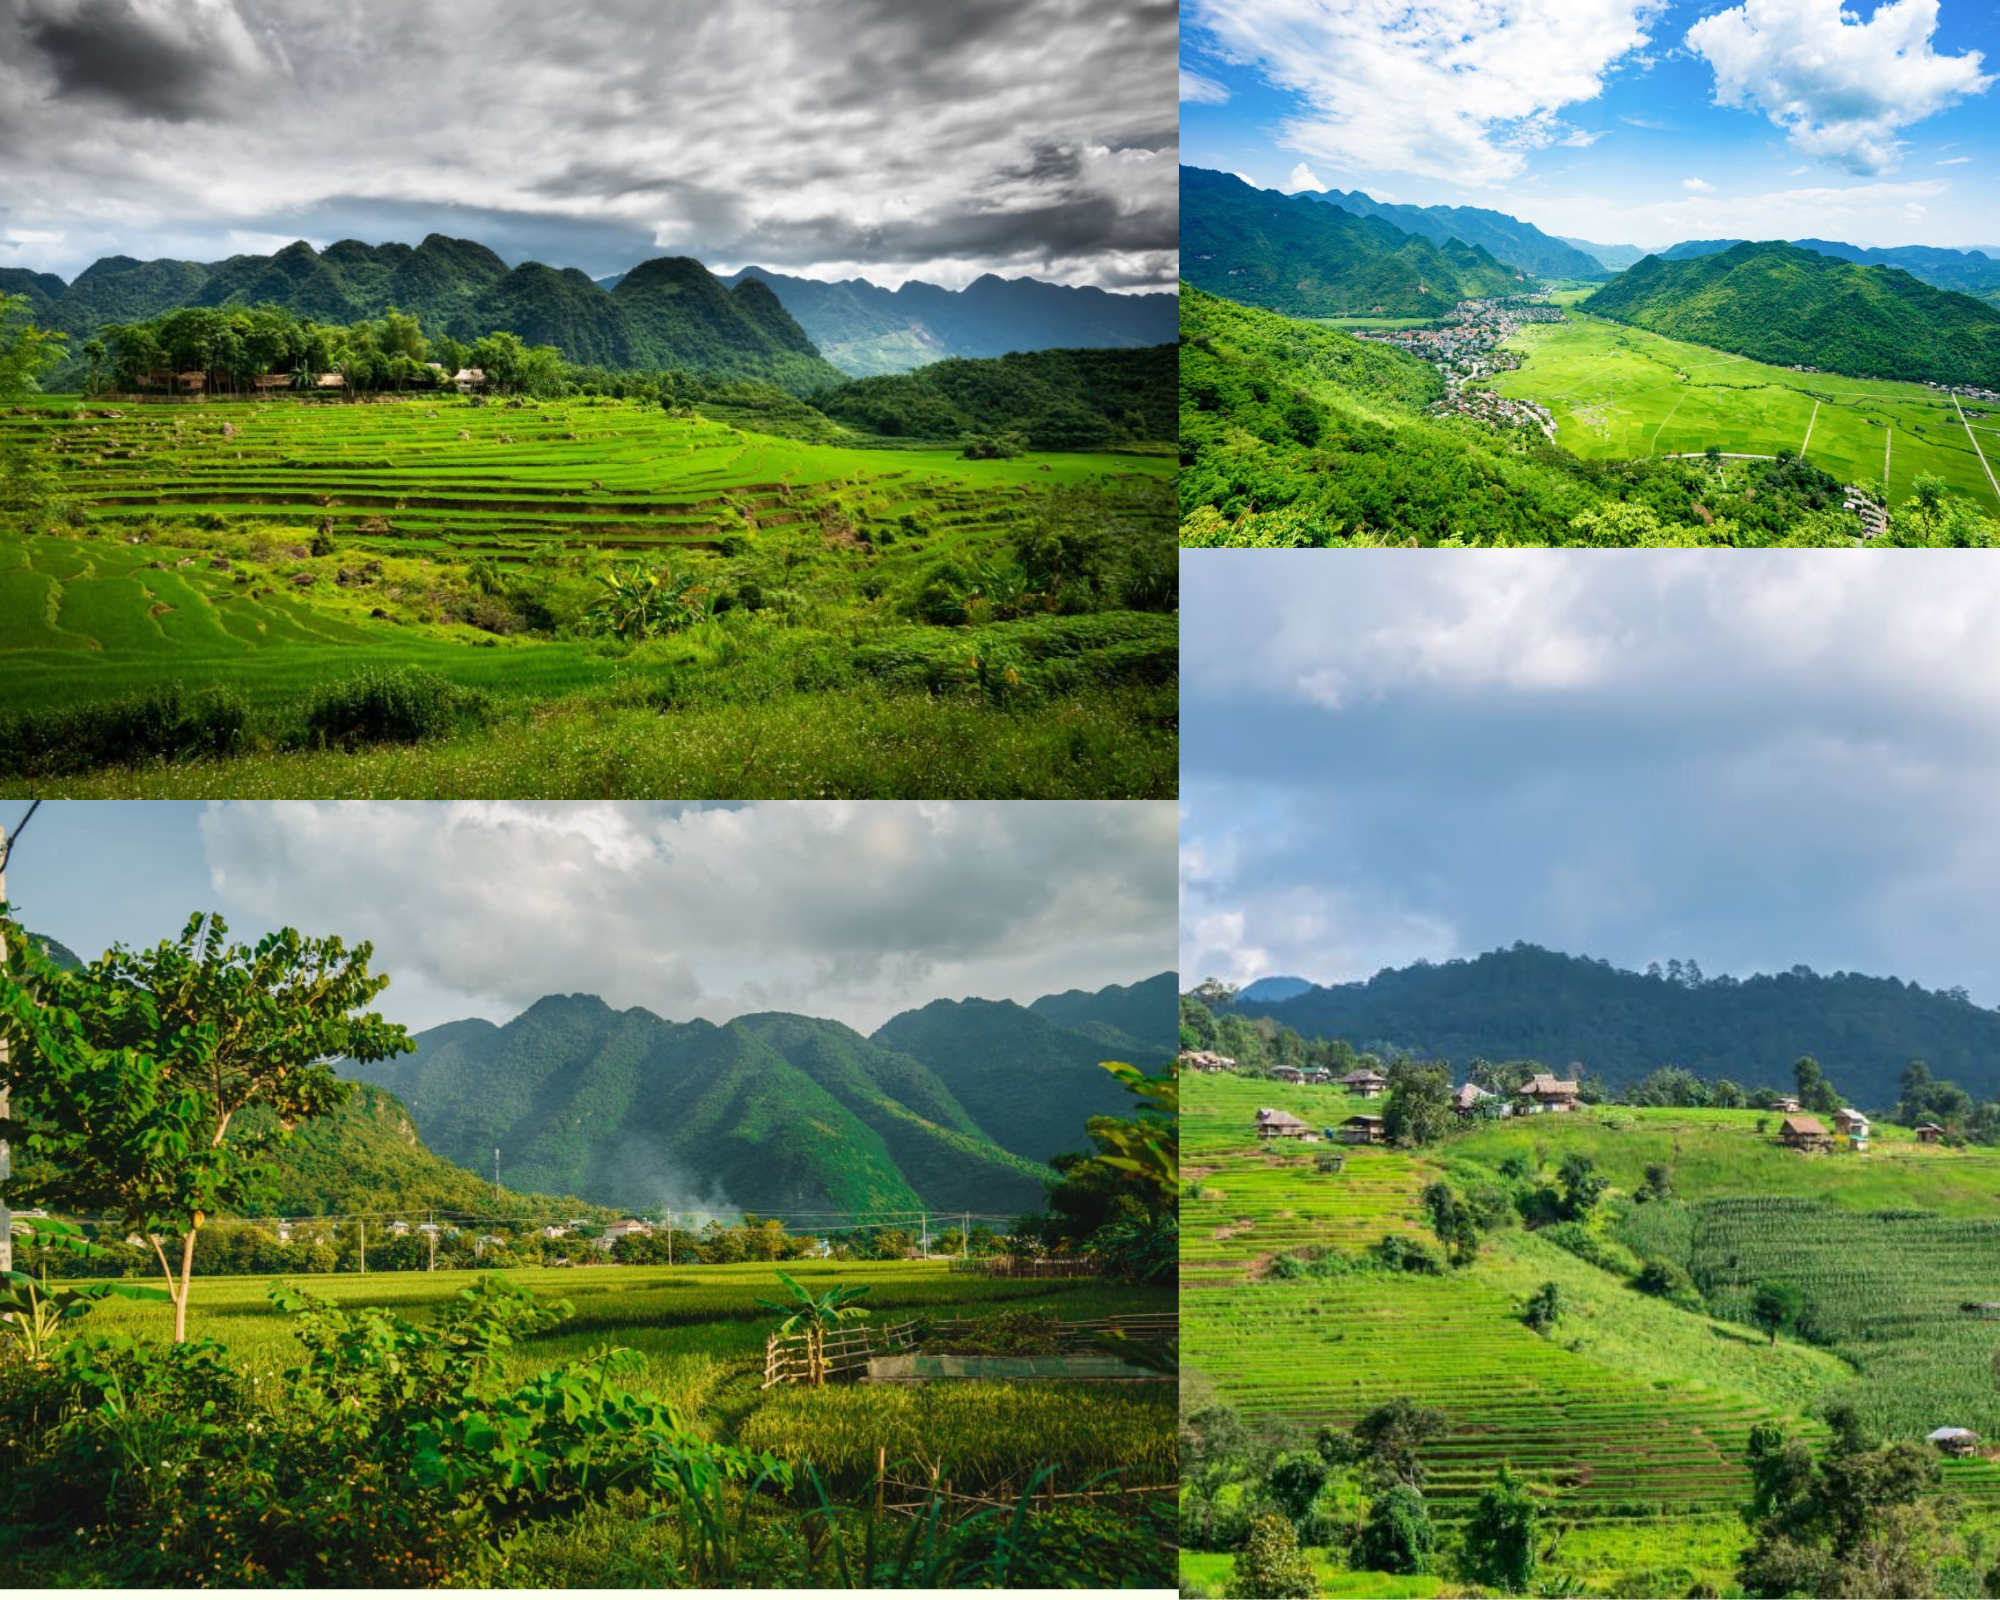 Mai Chau - a beautiful land with stunning landscape and rich culture